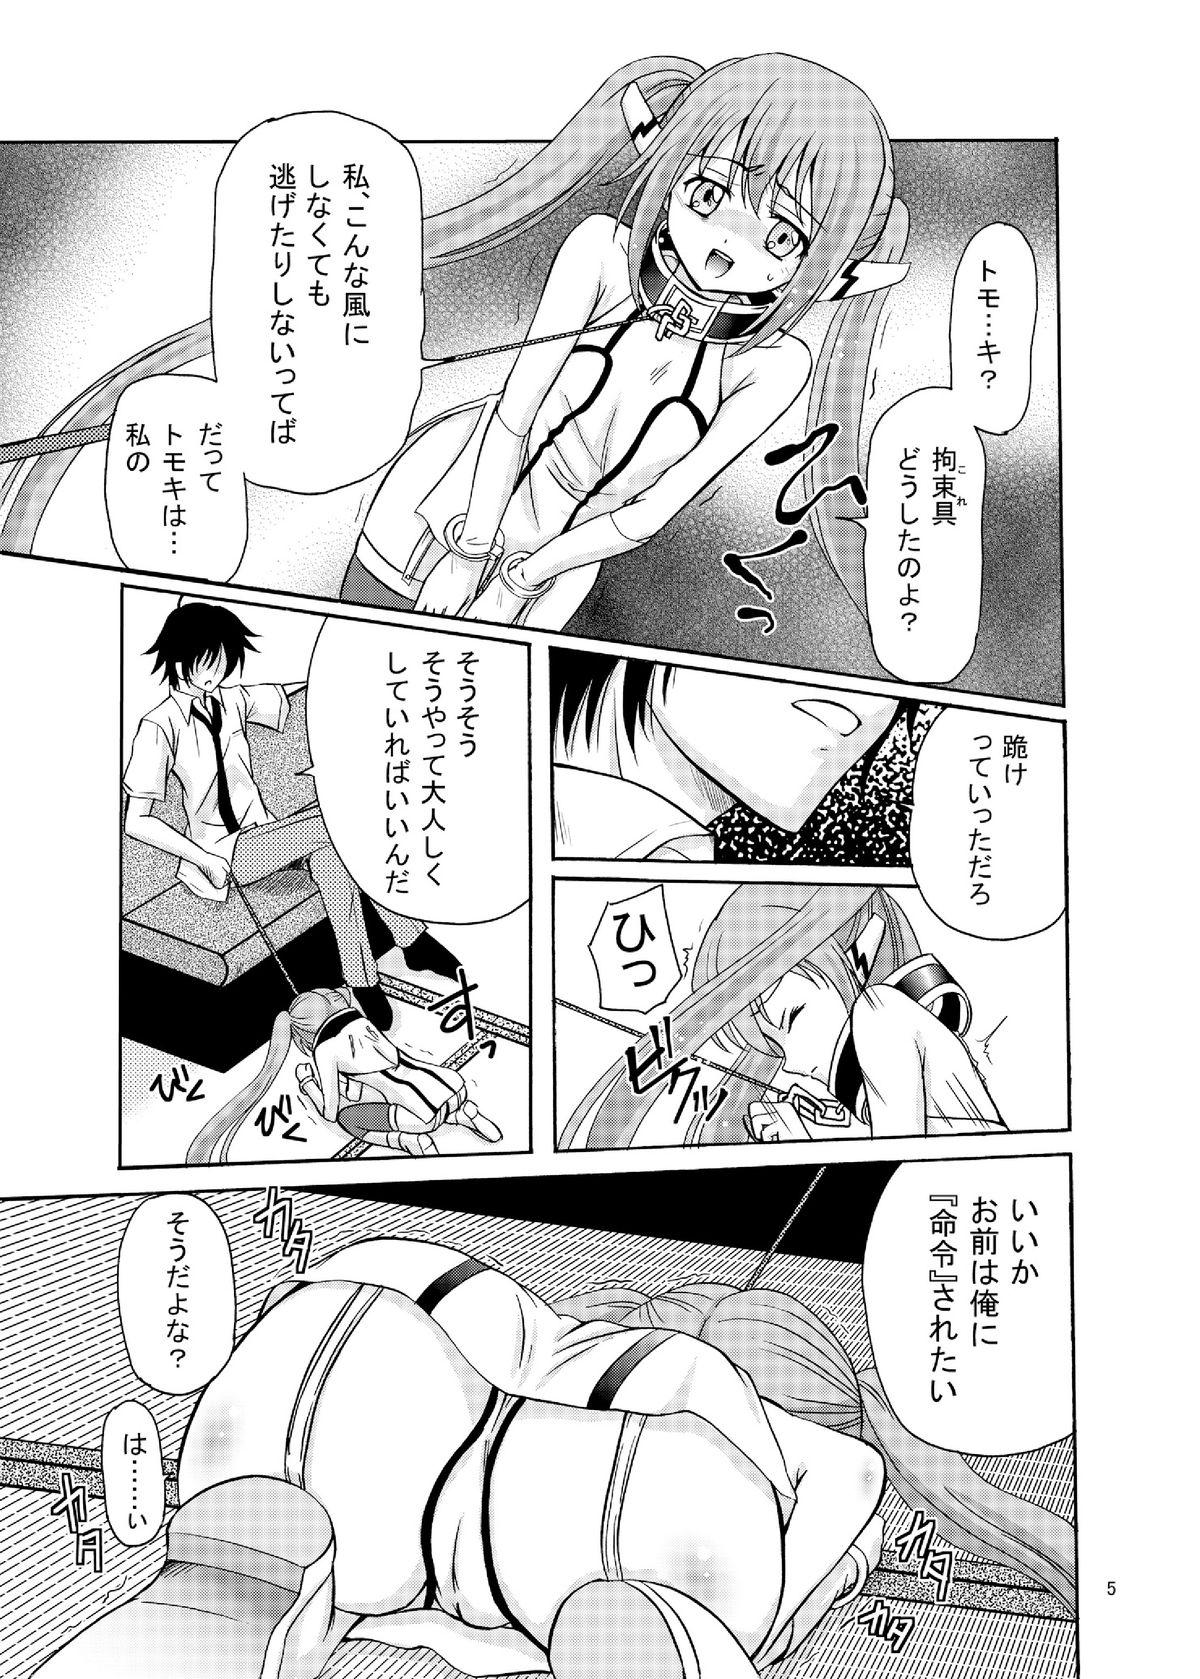 Dirty ARCANUMS16 Nymph - Sora no otoshimono Gay Military - Page 5